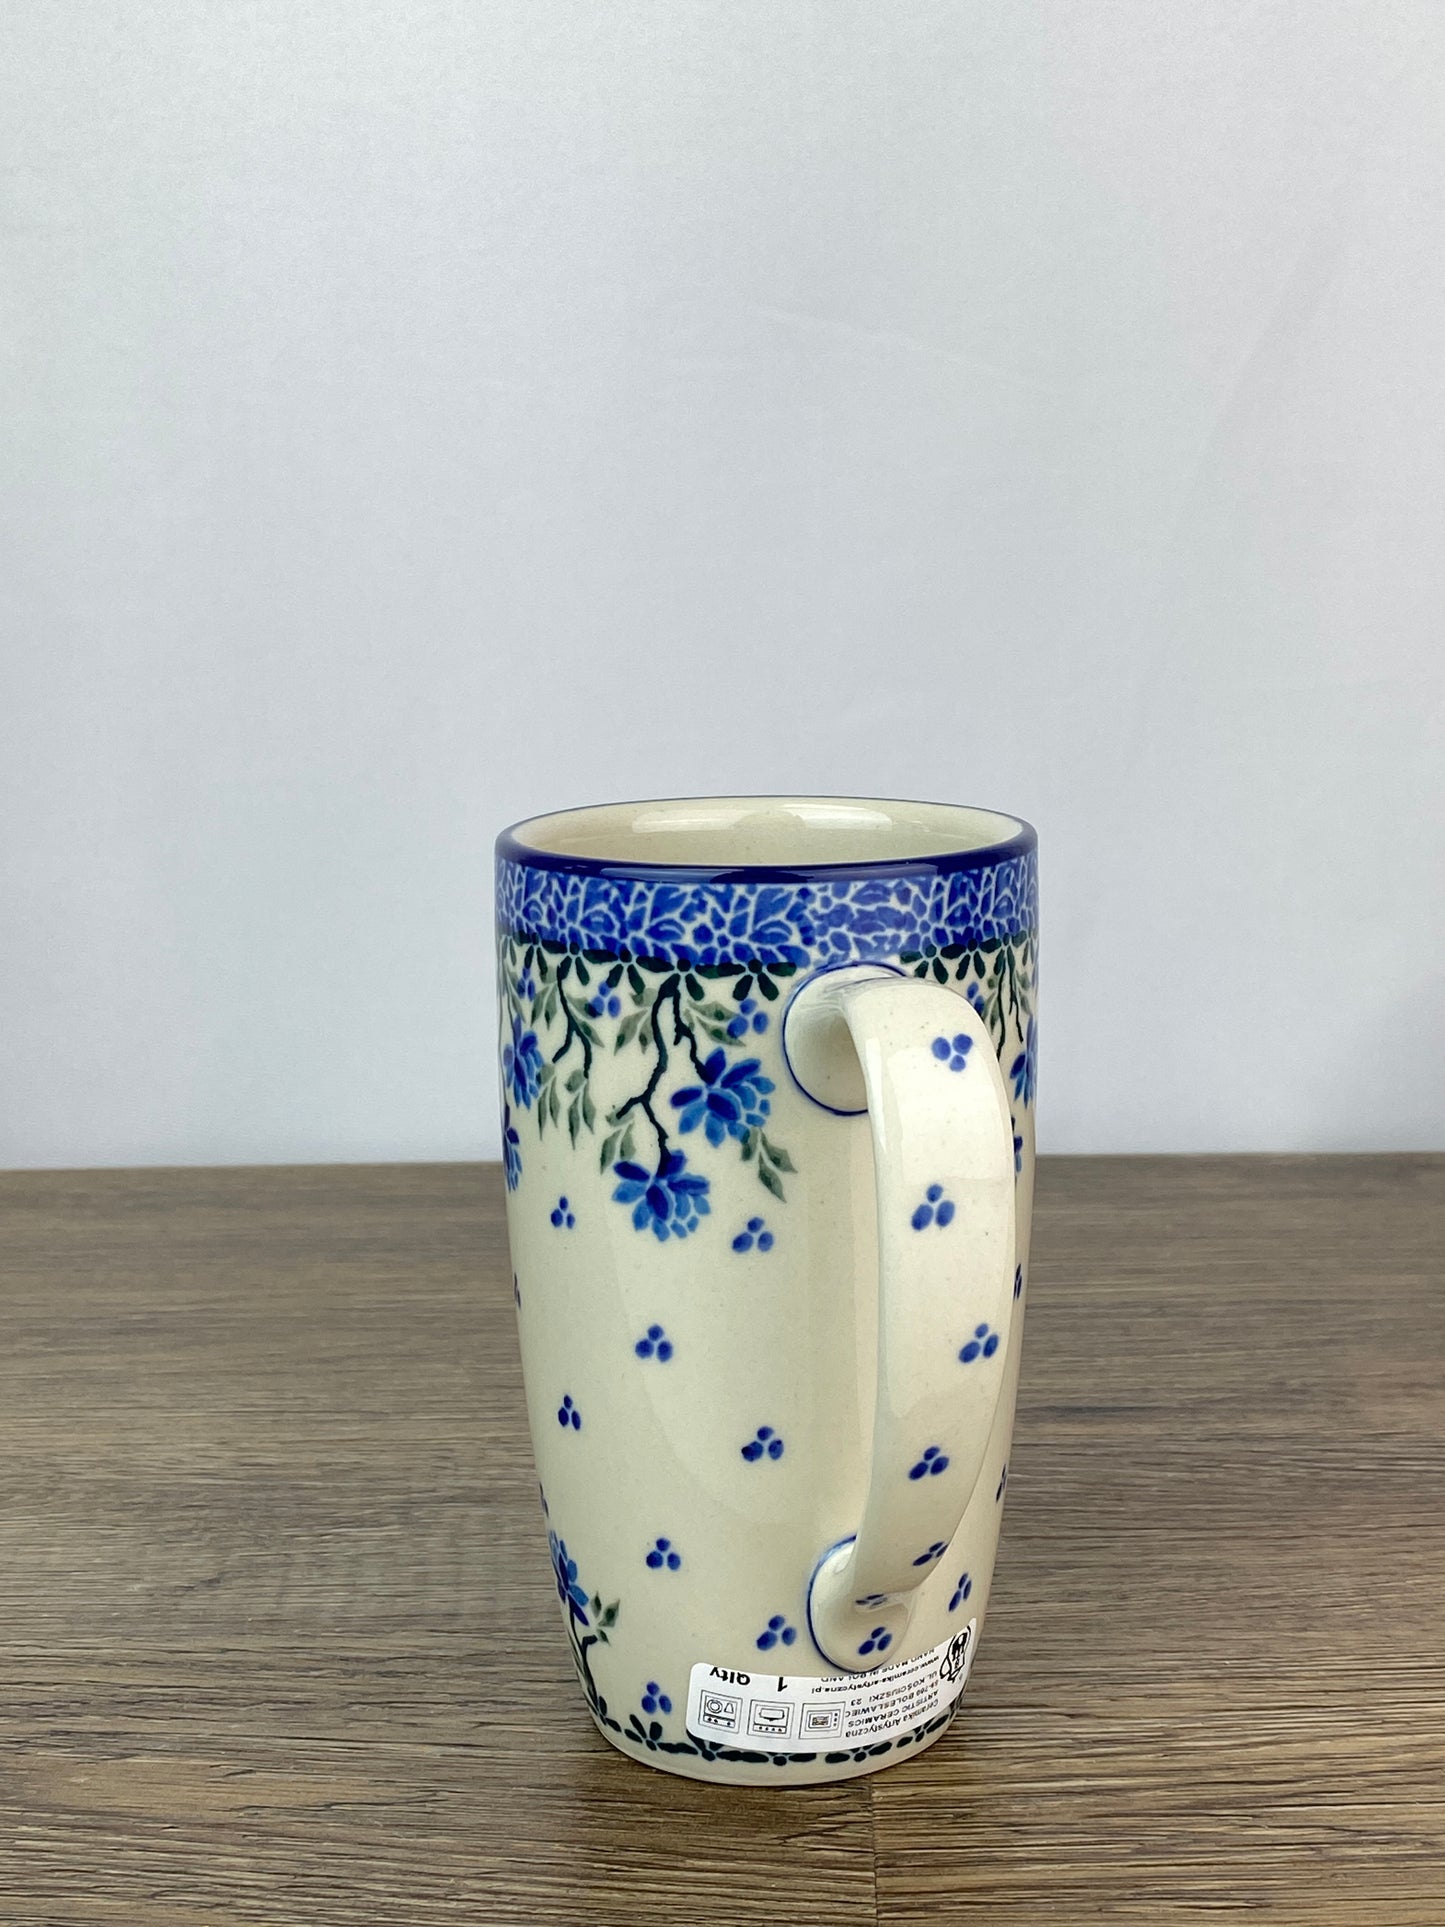 Latte Mug - Shape C52 - Pattern 2415